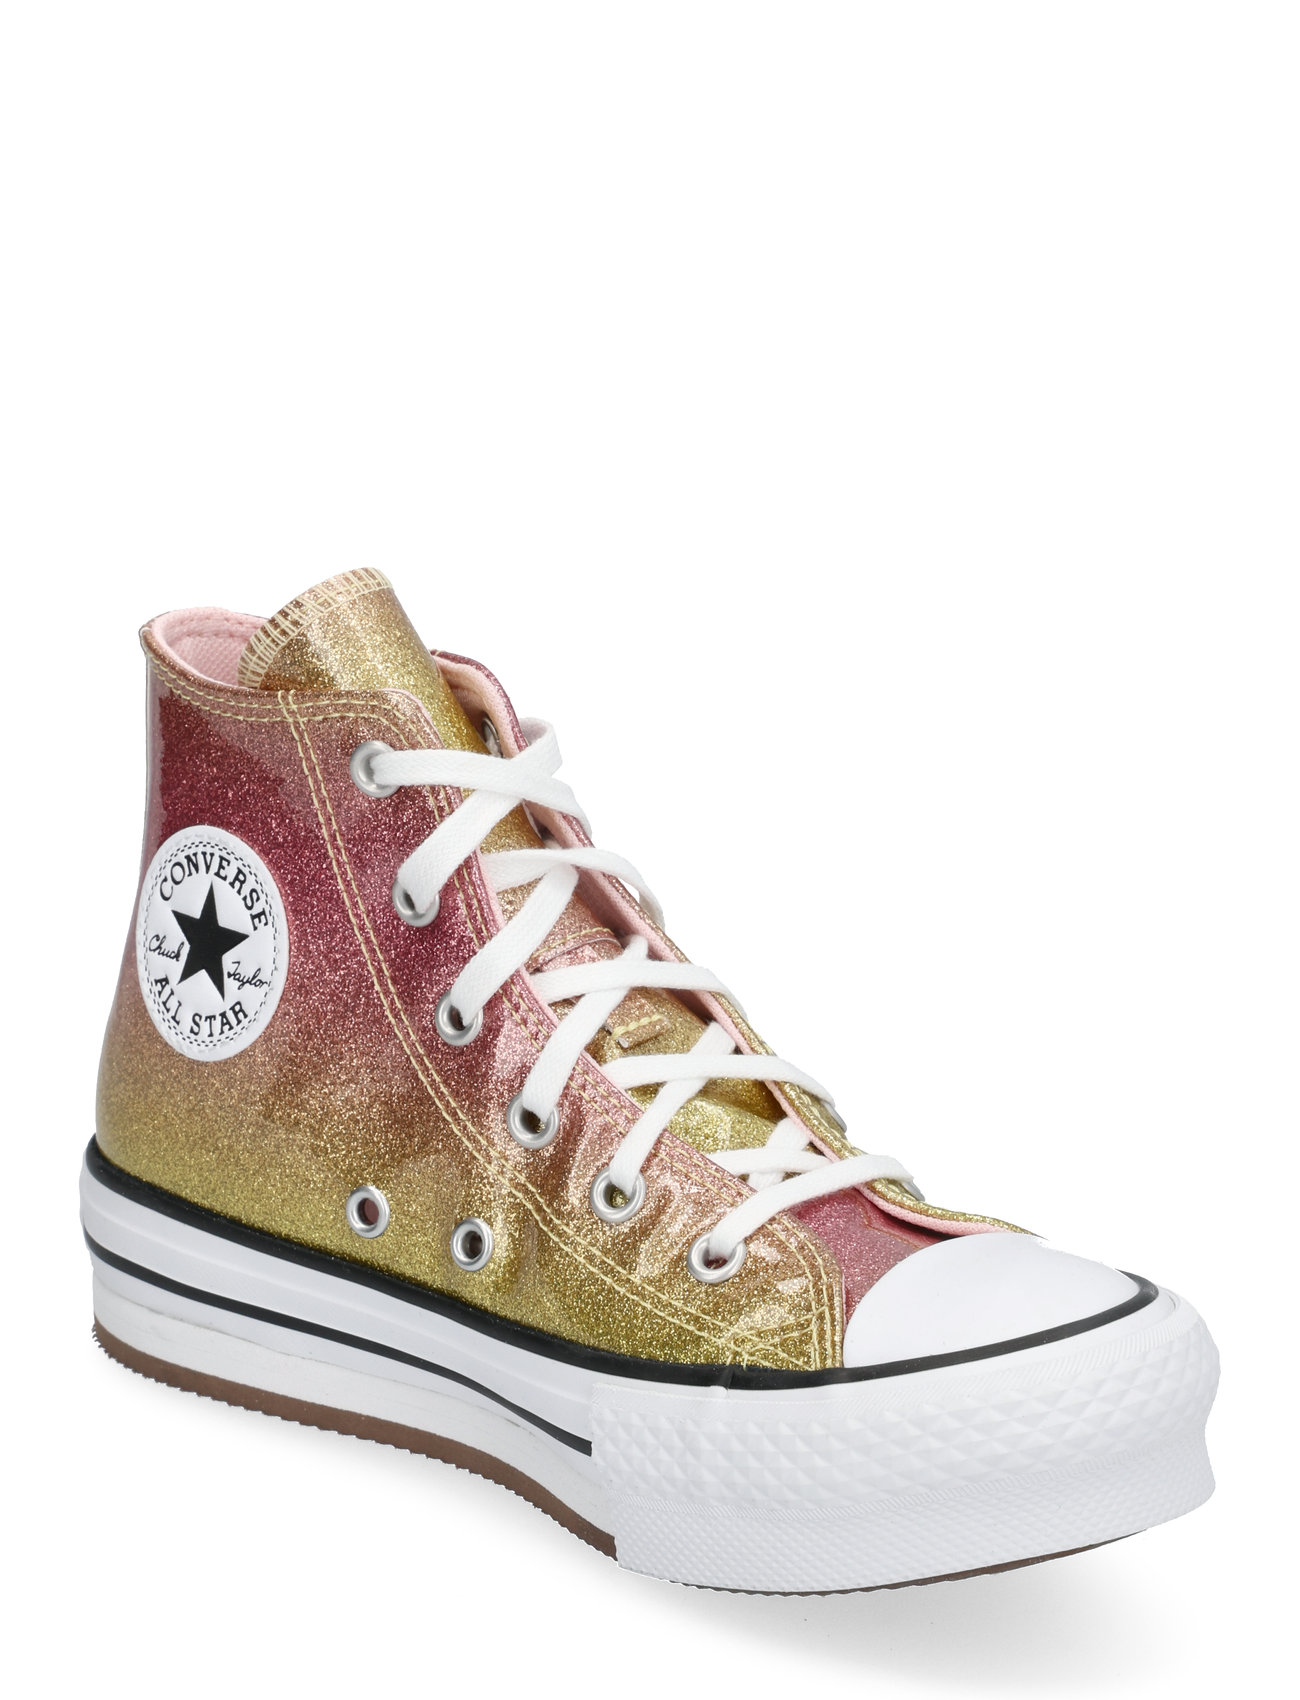 Ctas Eva Lift Hi Like Butter/Donut Glaze High-top Sneakers Multi/patterned Converse